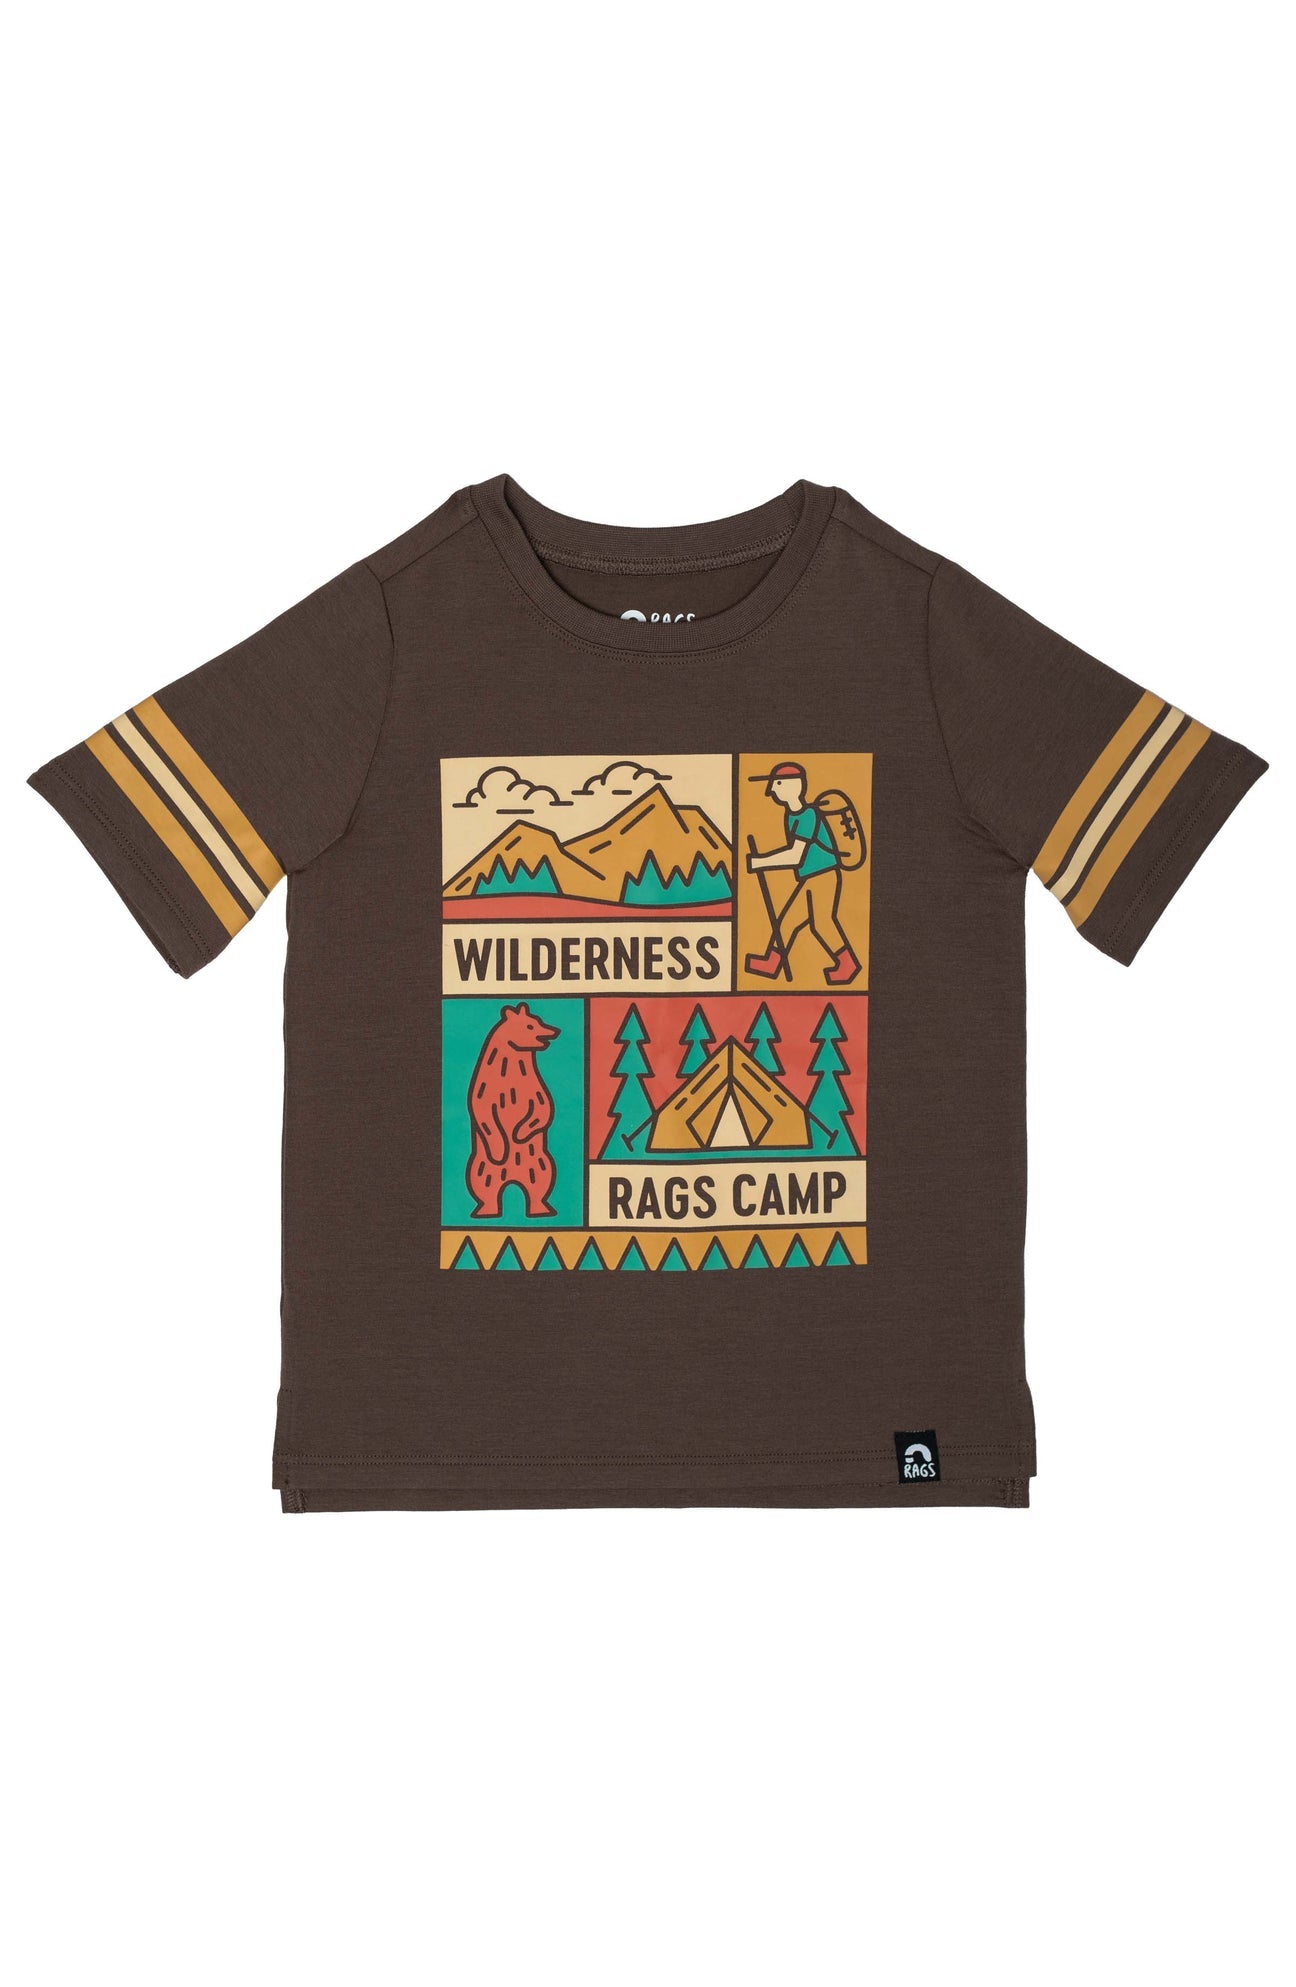 Retro Sleeve Kids Tee - 'Wilderness Rags Camp' - Major Brown TheT43Shop